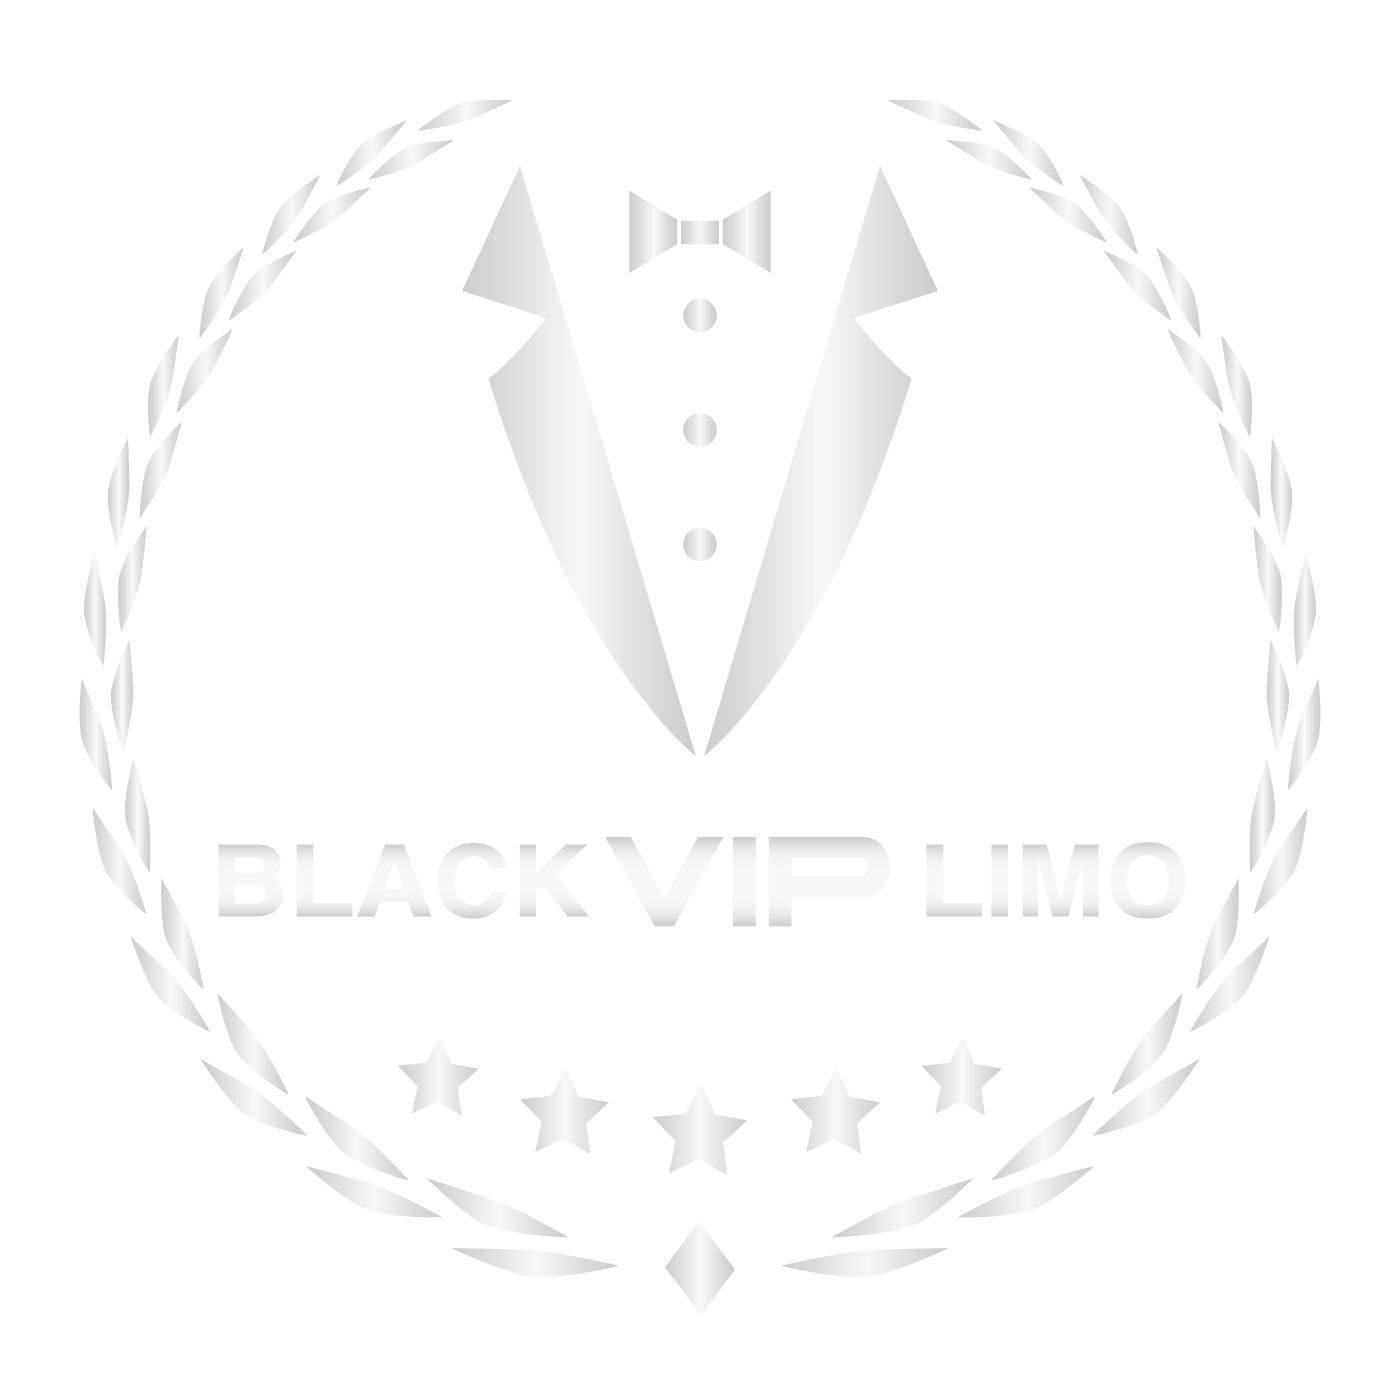 Black VIP Logo - Benefits. Black VIP Limo